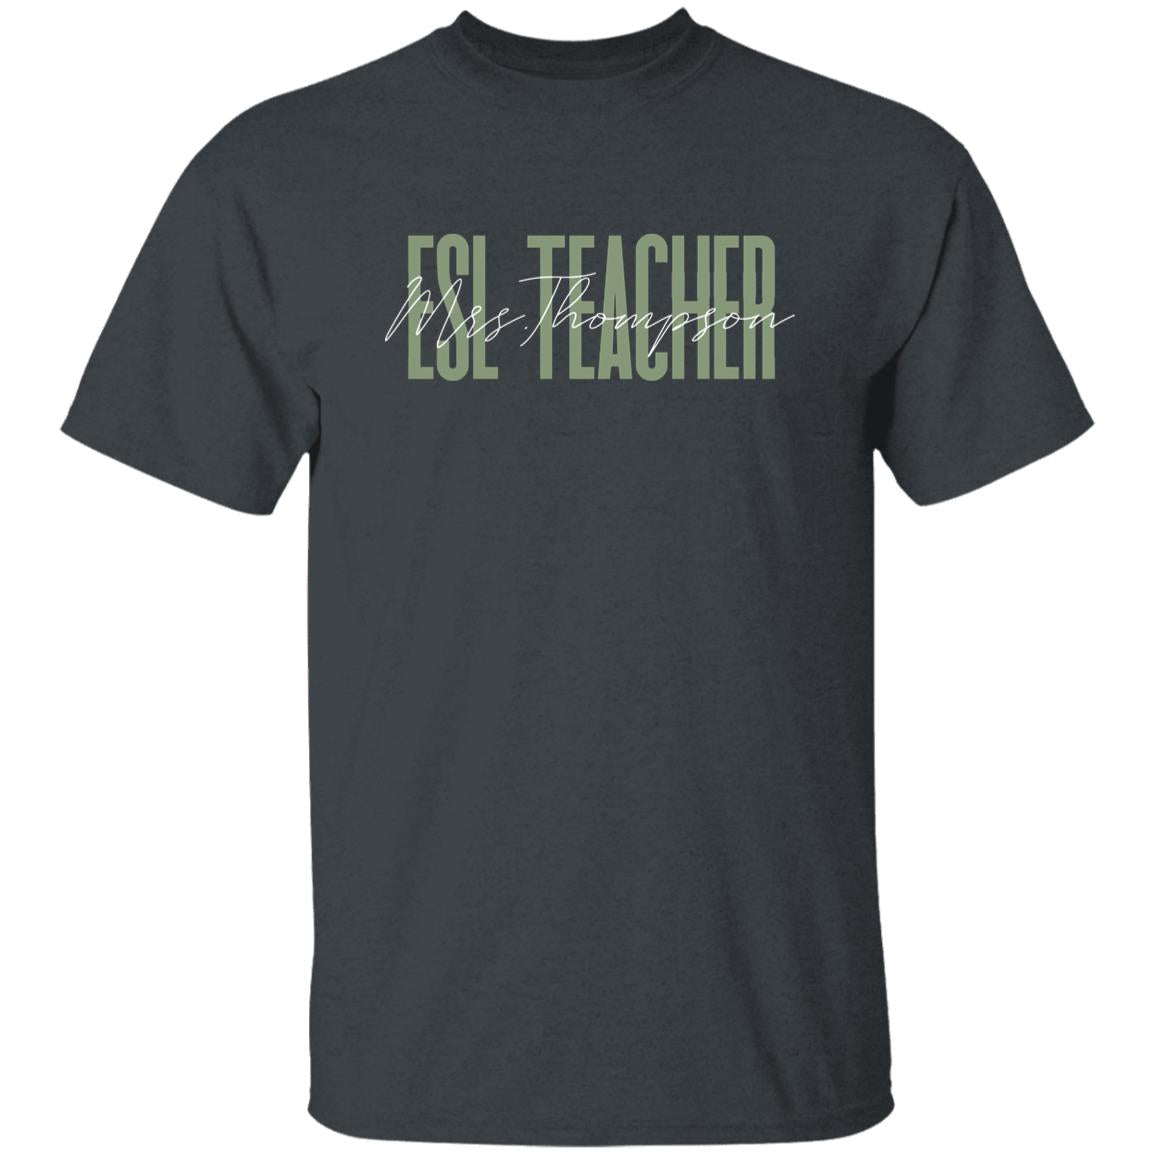 ESL teacher T-Shirt gift English as Second Language Teacher Customized Unisex tee Black Navy Dark Heather-Family-Gift-Planet